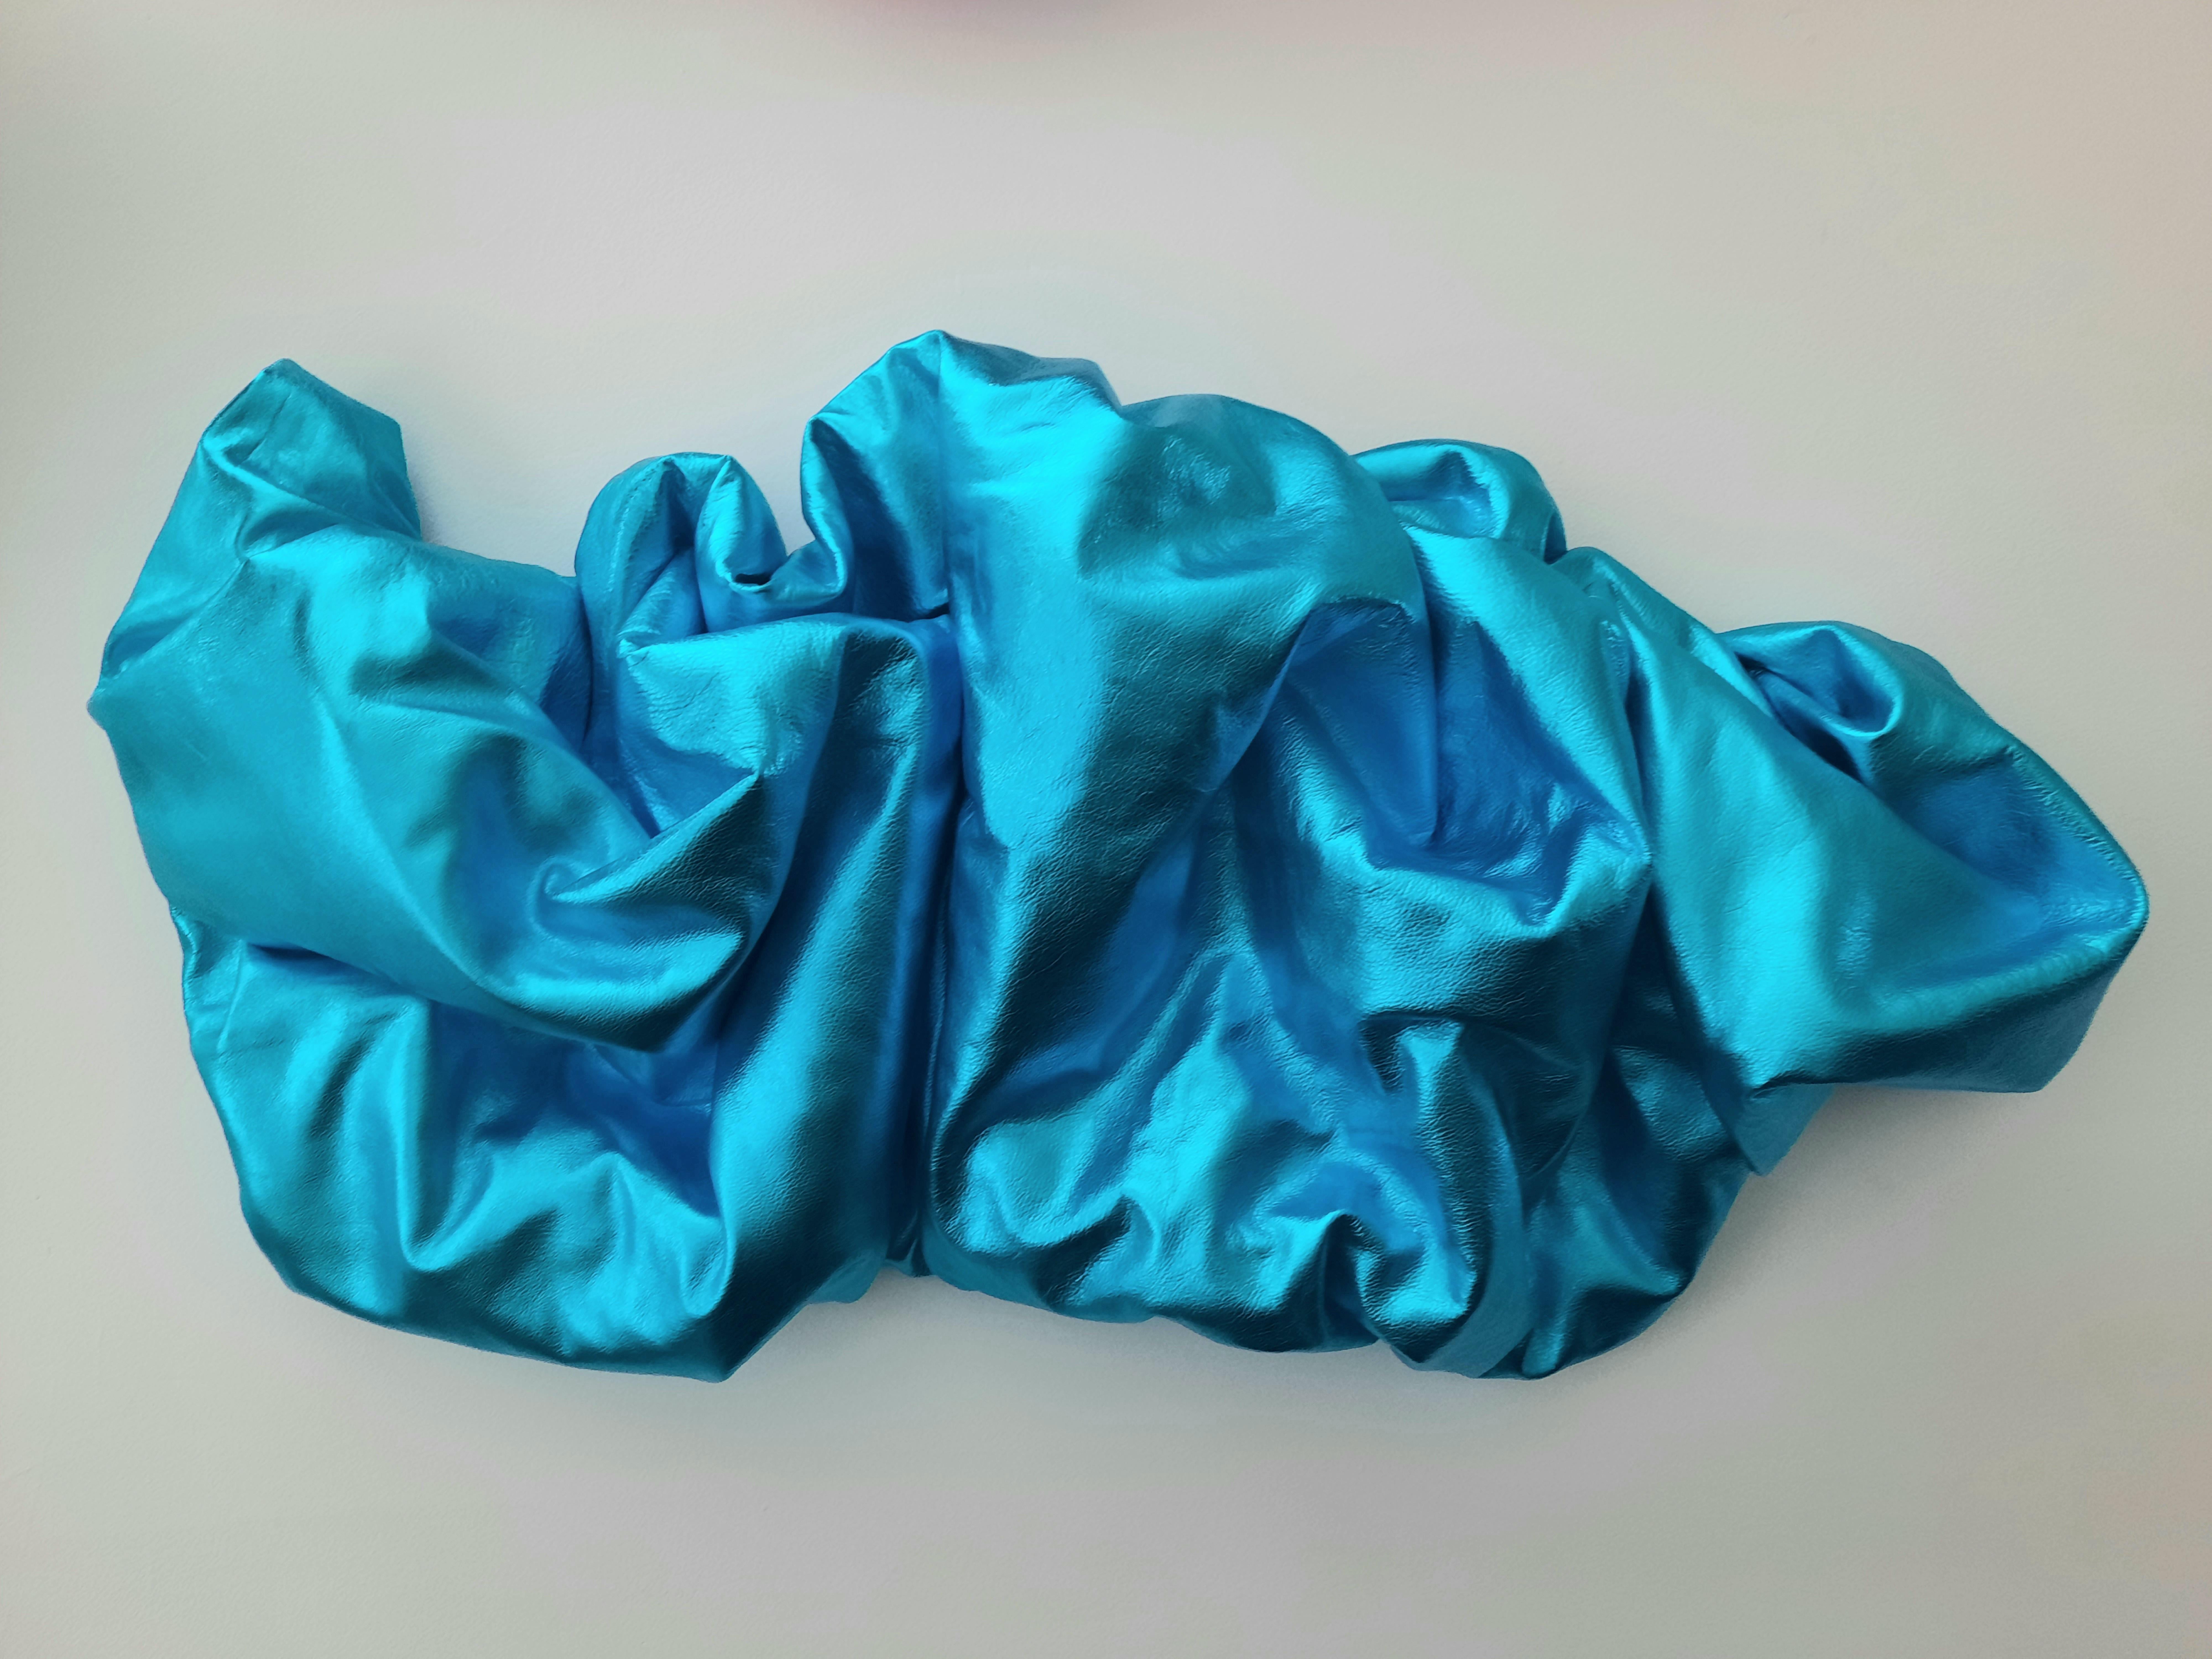 Ted VanCleave Abstract Sculpture - Drape Aqua Blue 117 (folds pop slick metallic smooth leather wall sculpture art)